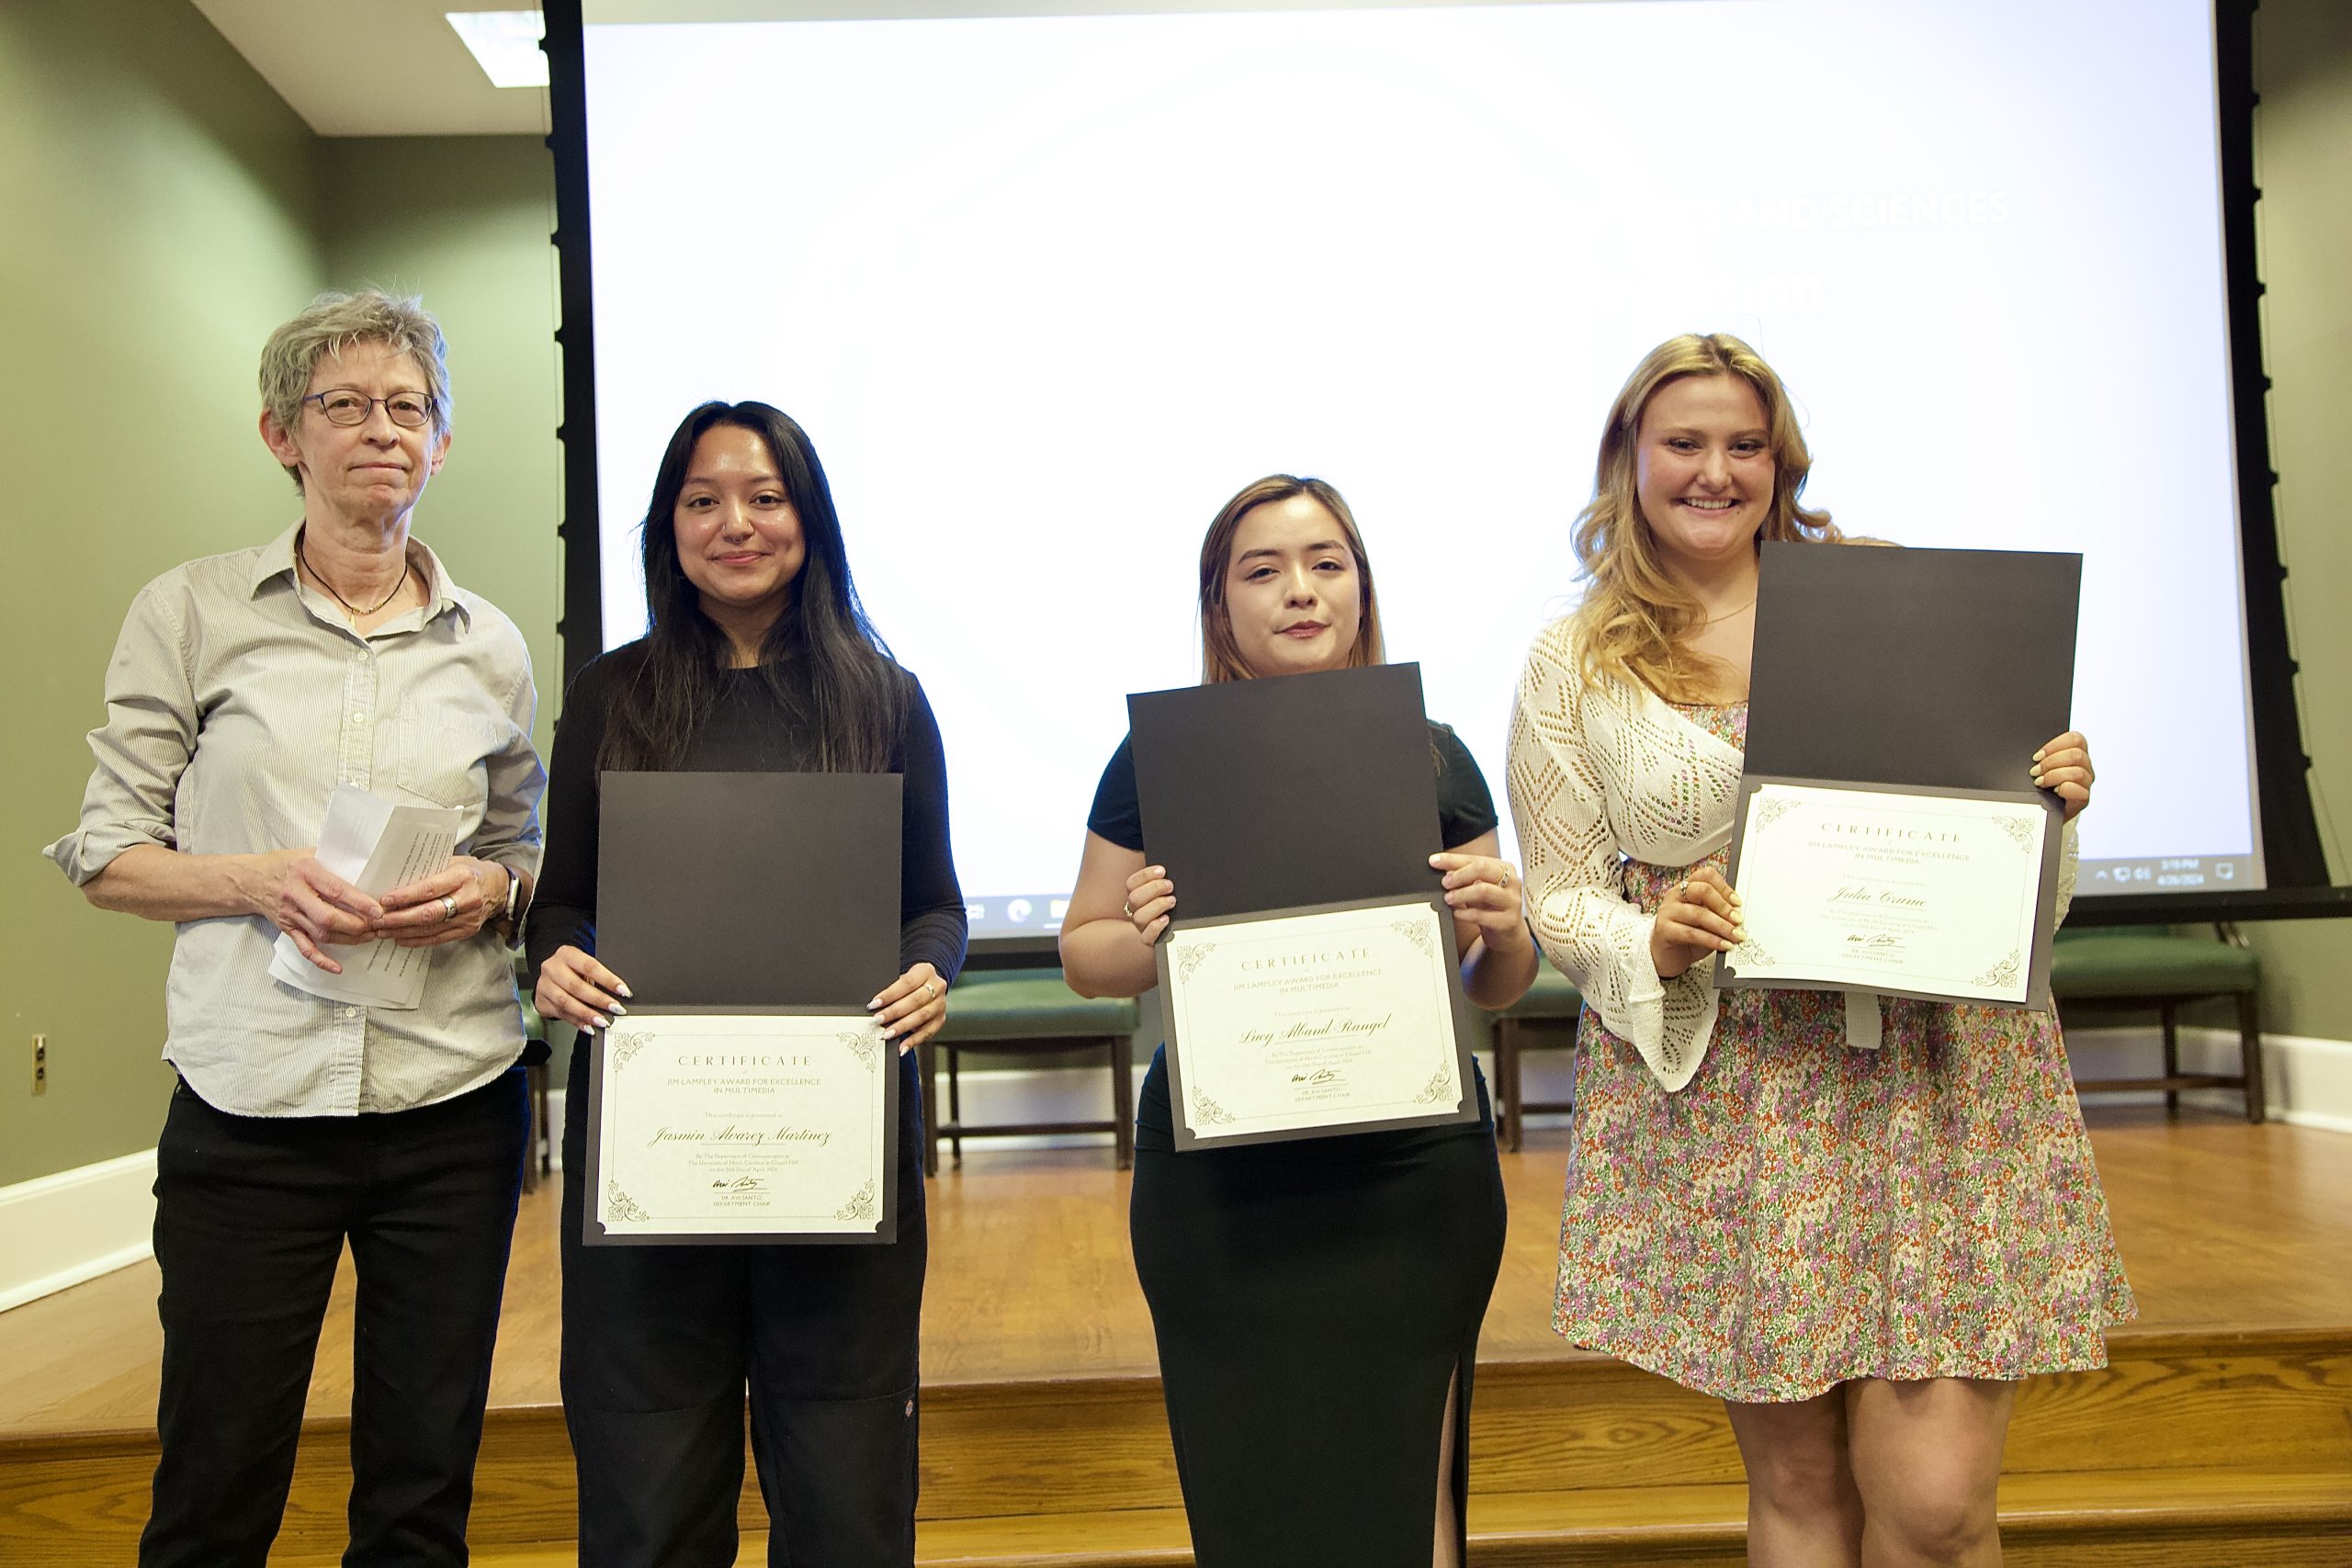 Jim Lampley Award for Excellence in Multimedia Presented to Lucy Albanil-Rangel, Jasmin Alvarez Martinez and Julia Crume by Joyce Rudinsky